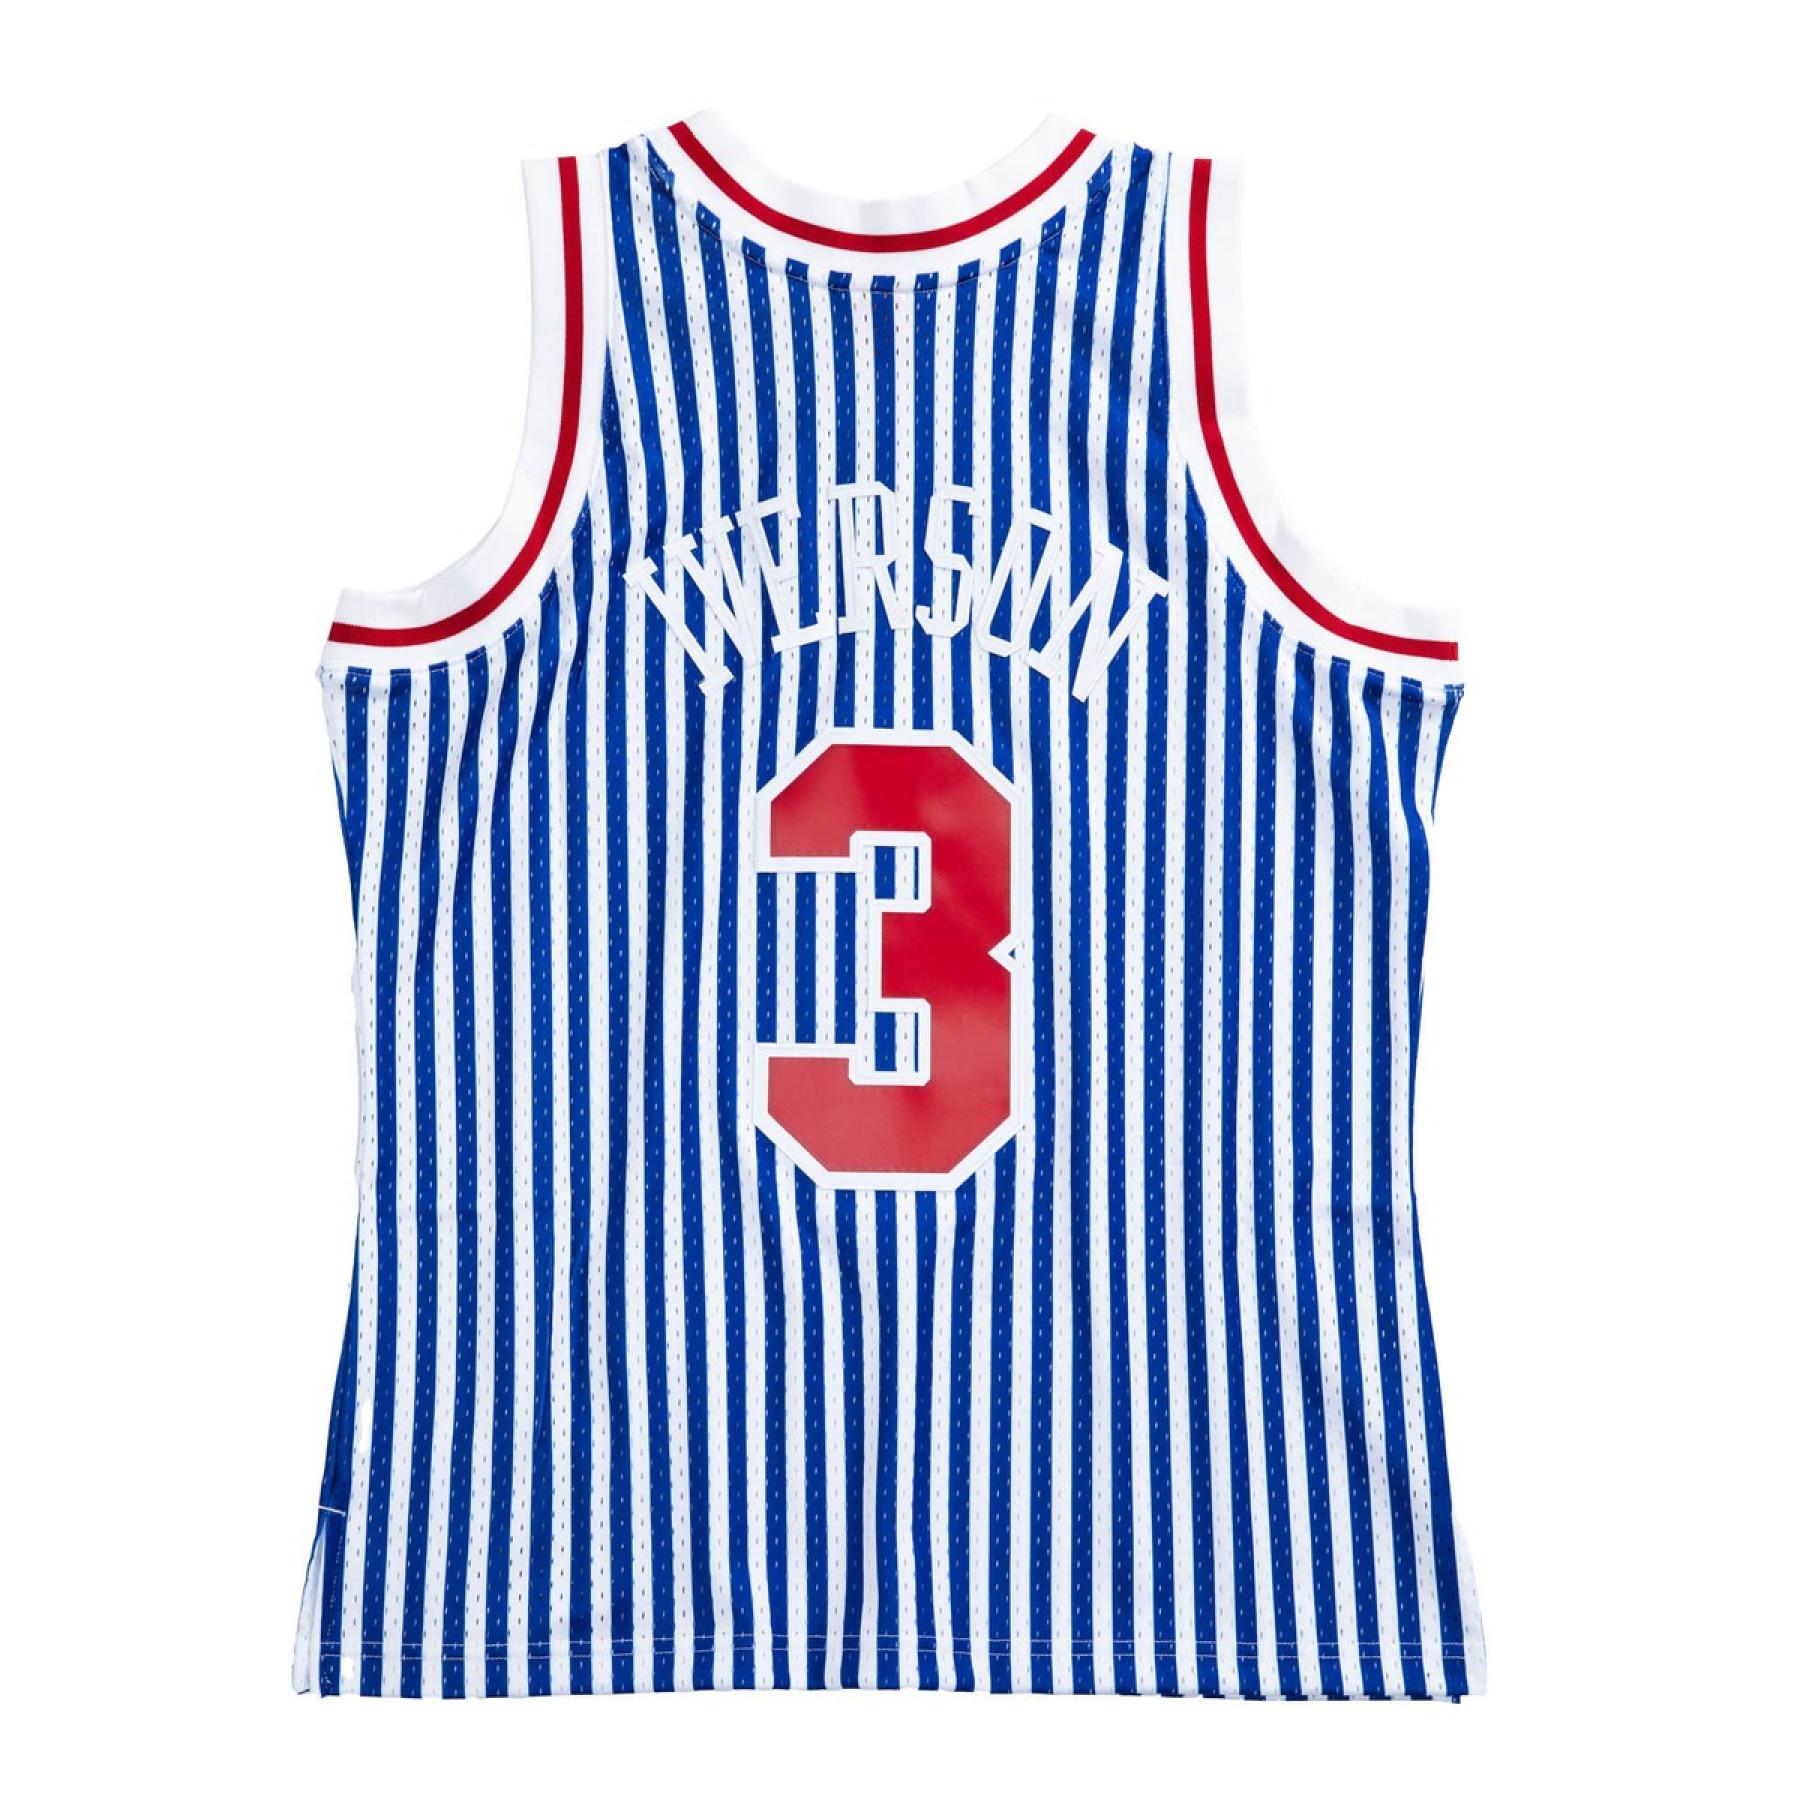 Jersey Philadelphia 76ers striped